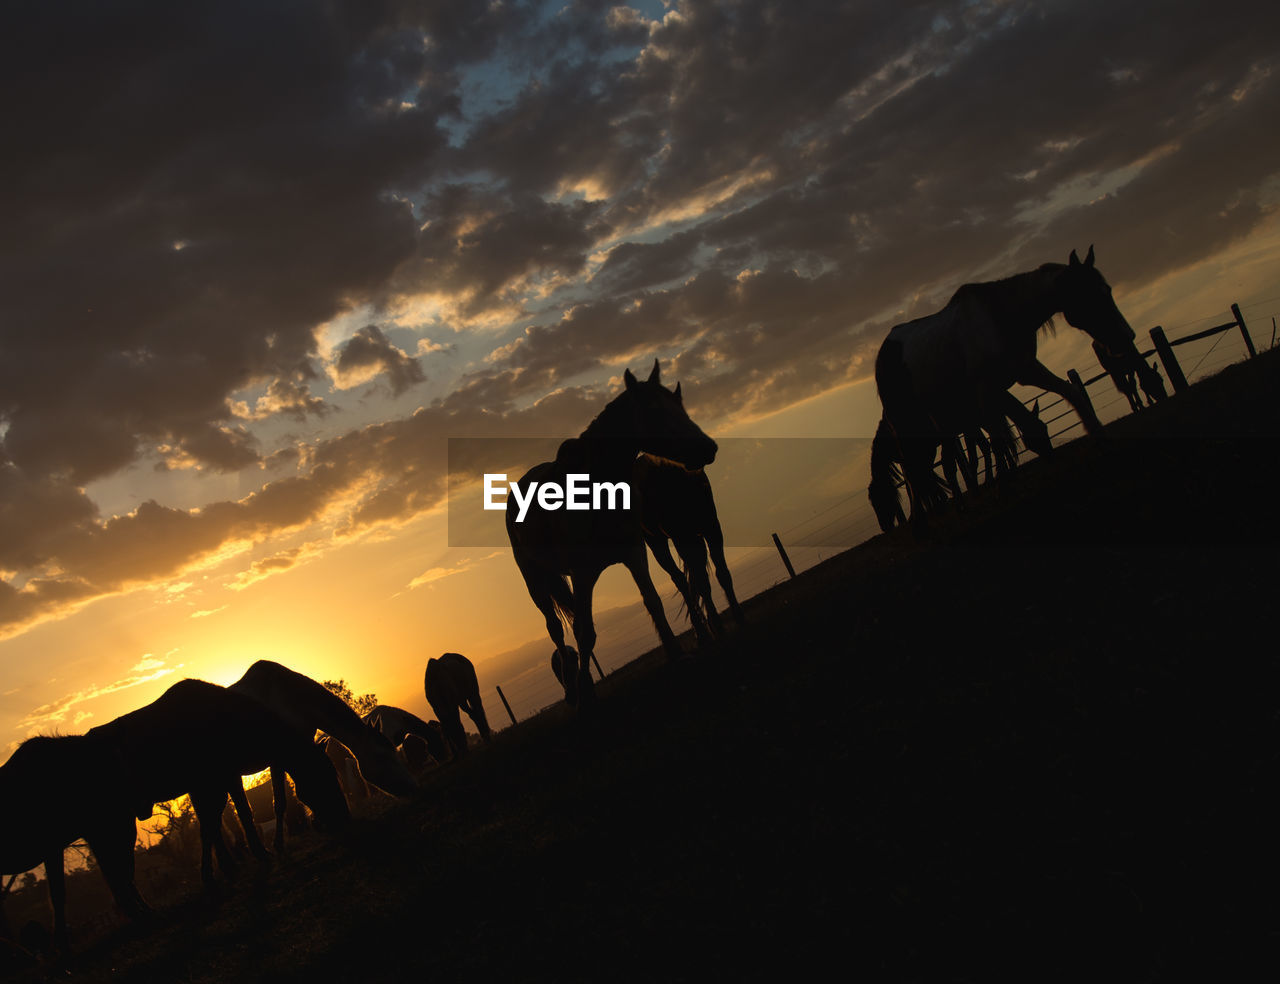 Silhouette horses against sky during sunset